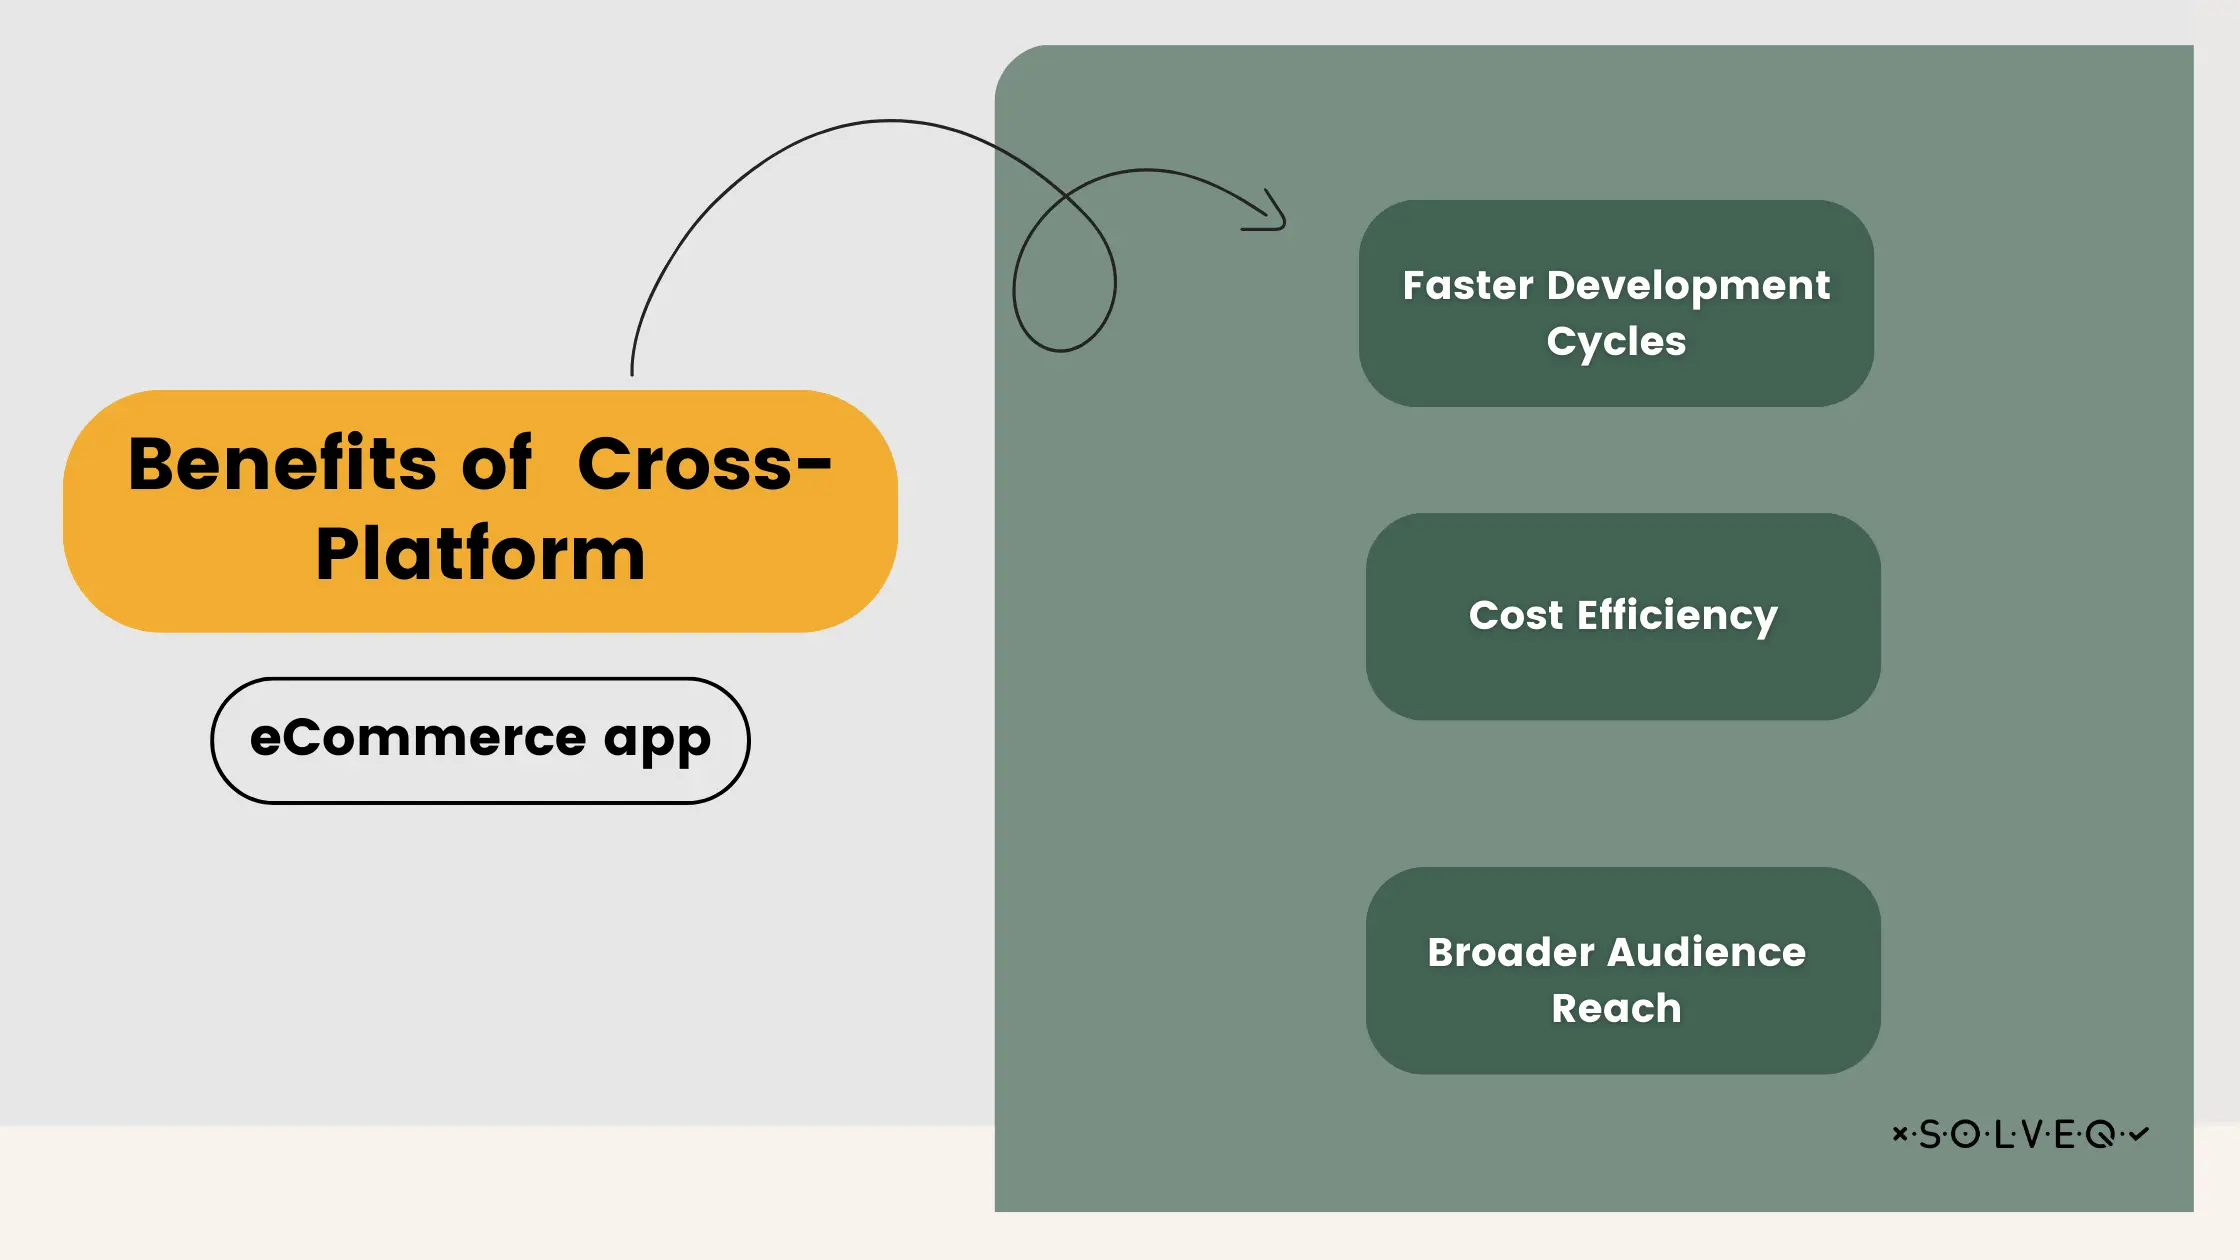 The benefits of cross-platform development